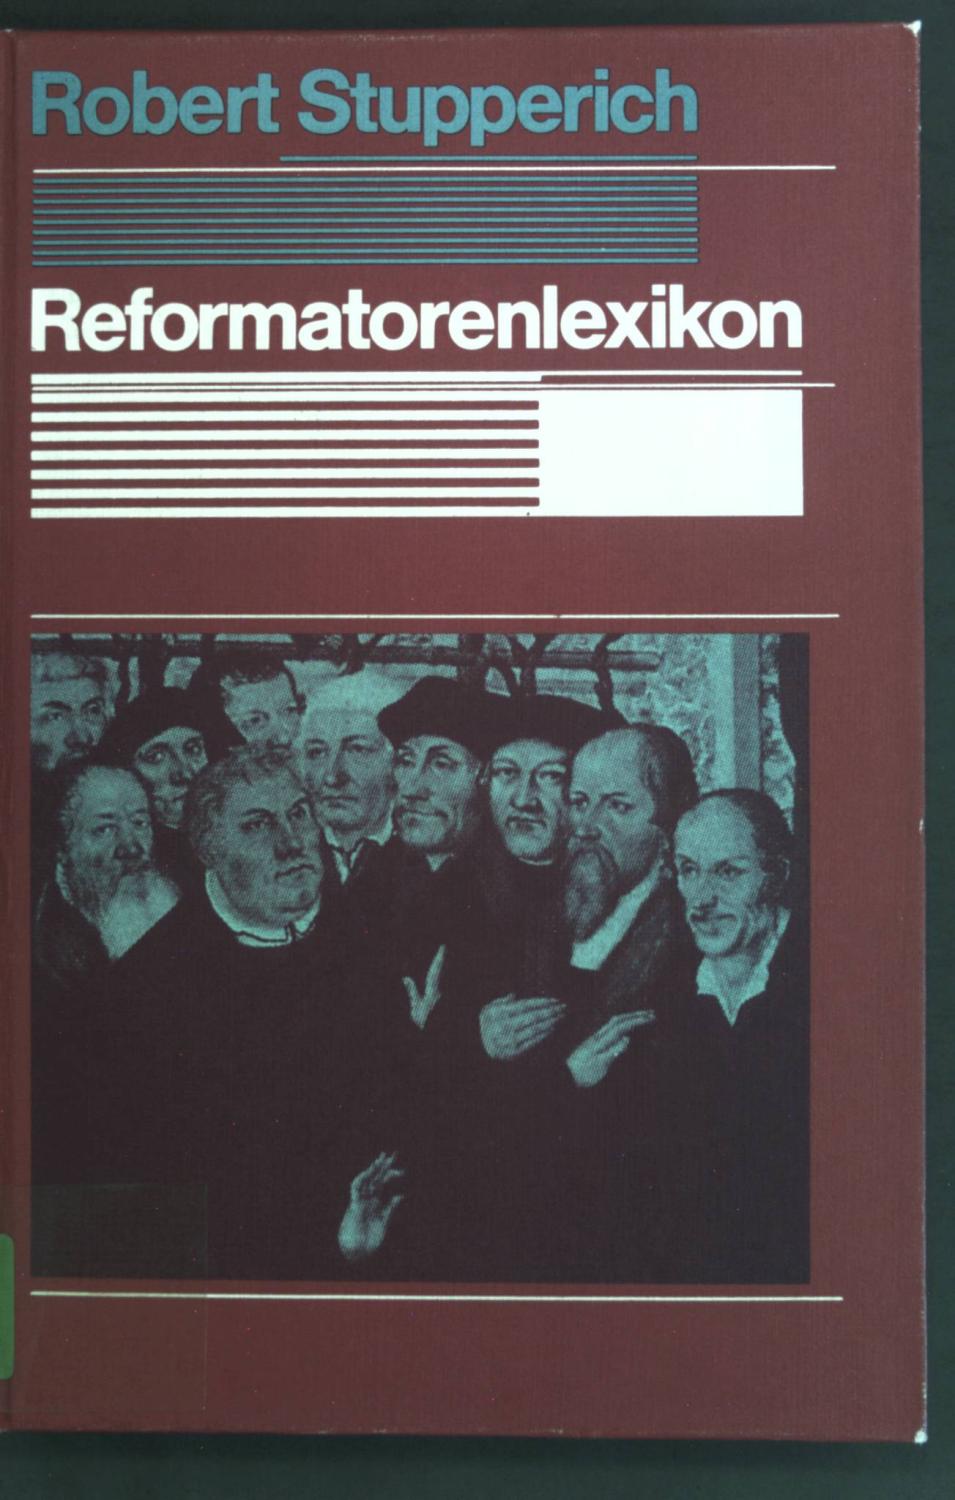 Reformatorenlexikon (German Edition)